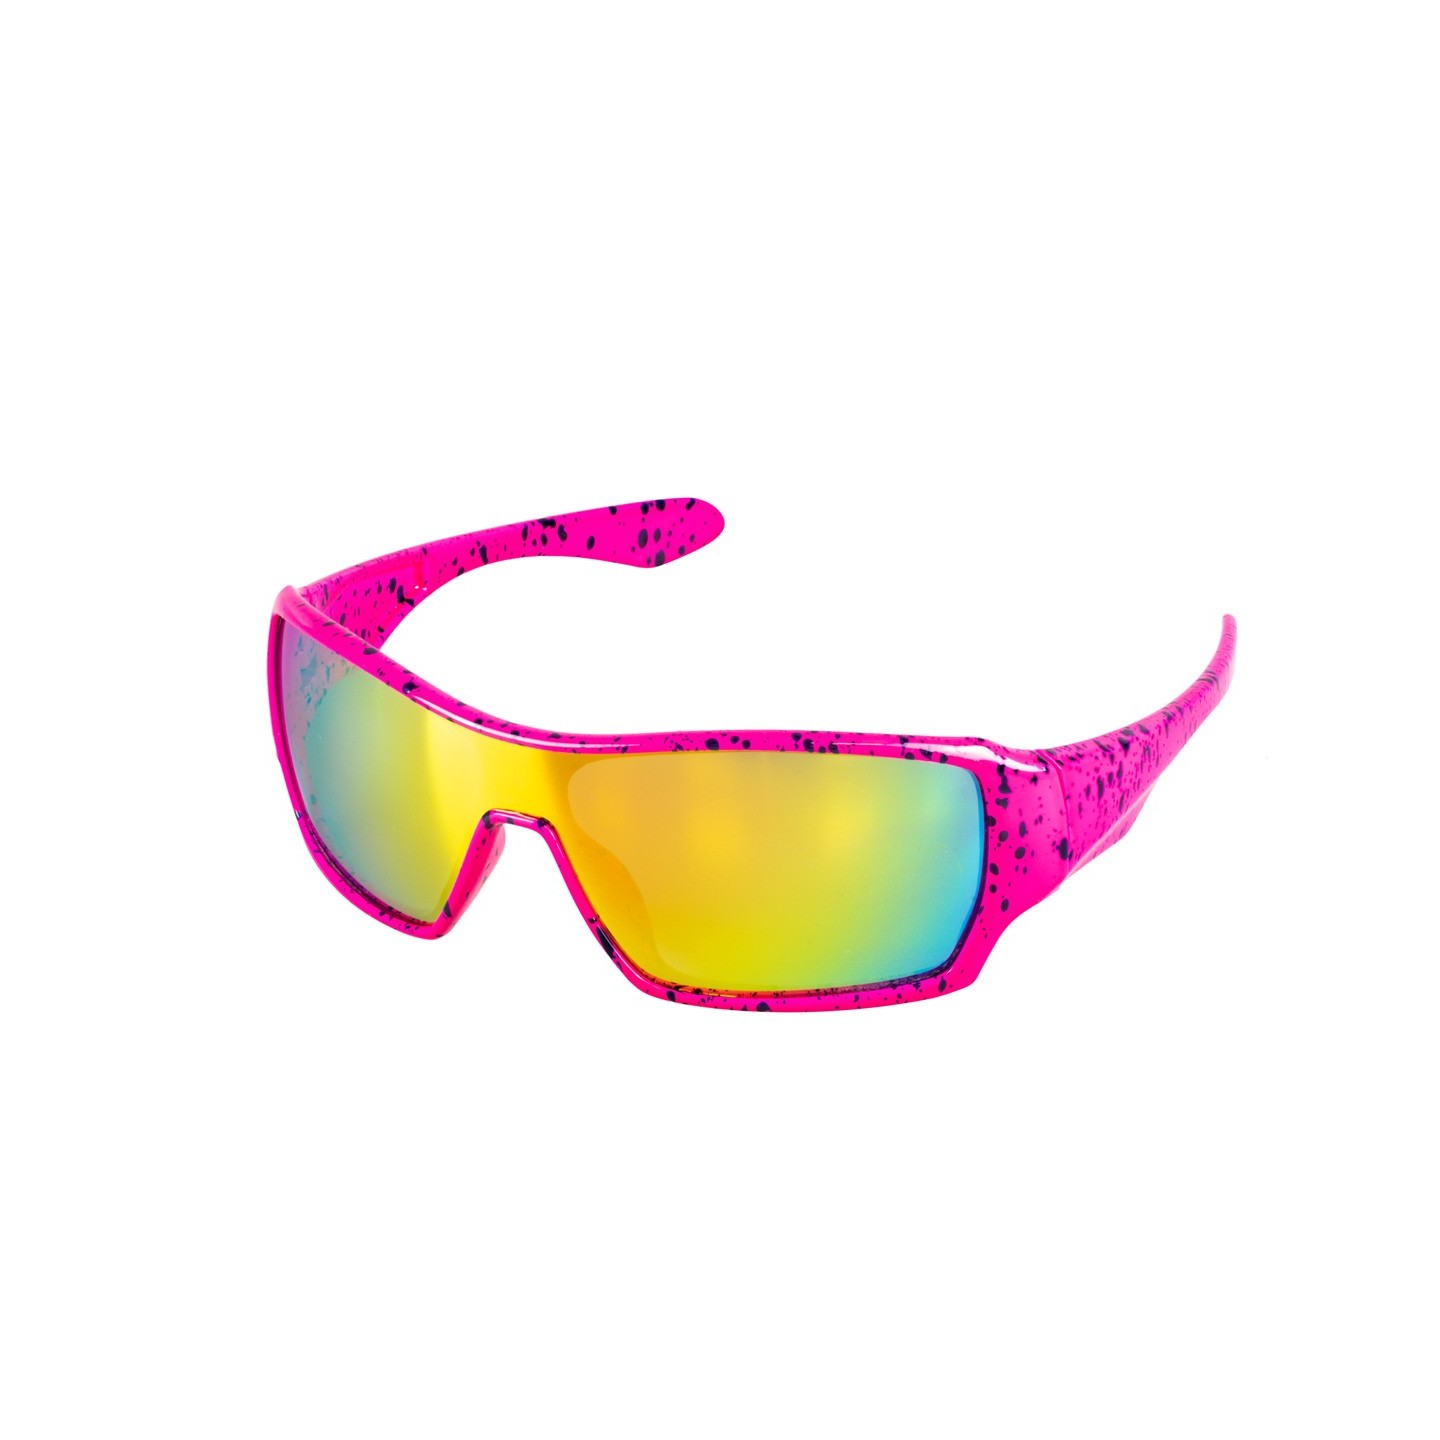 feestbril fluo roze neon party bril